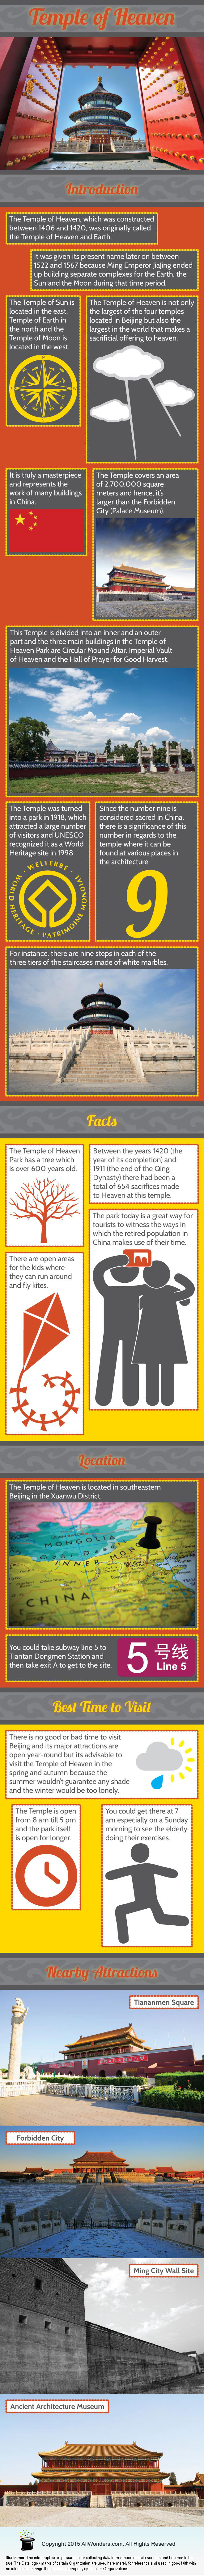 Temple of Heaven, Beijing - Facts & Infographic